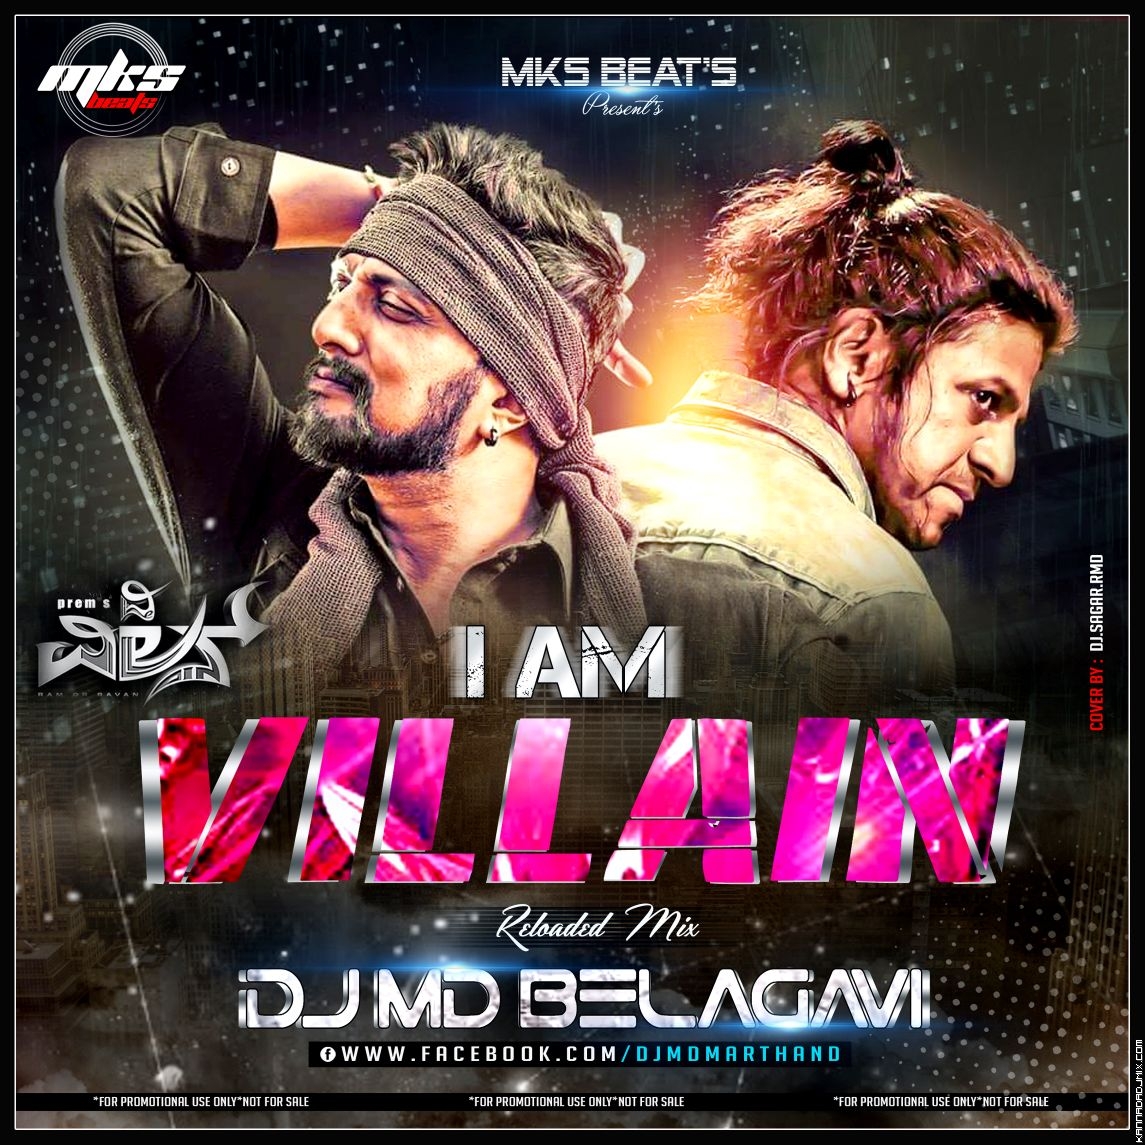 I AM VILLAIN vs EDM RELOADED [DJ MD BELAGAVI ft.MKS BEATS].mp3